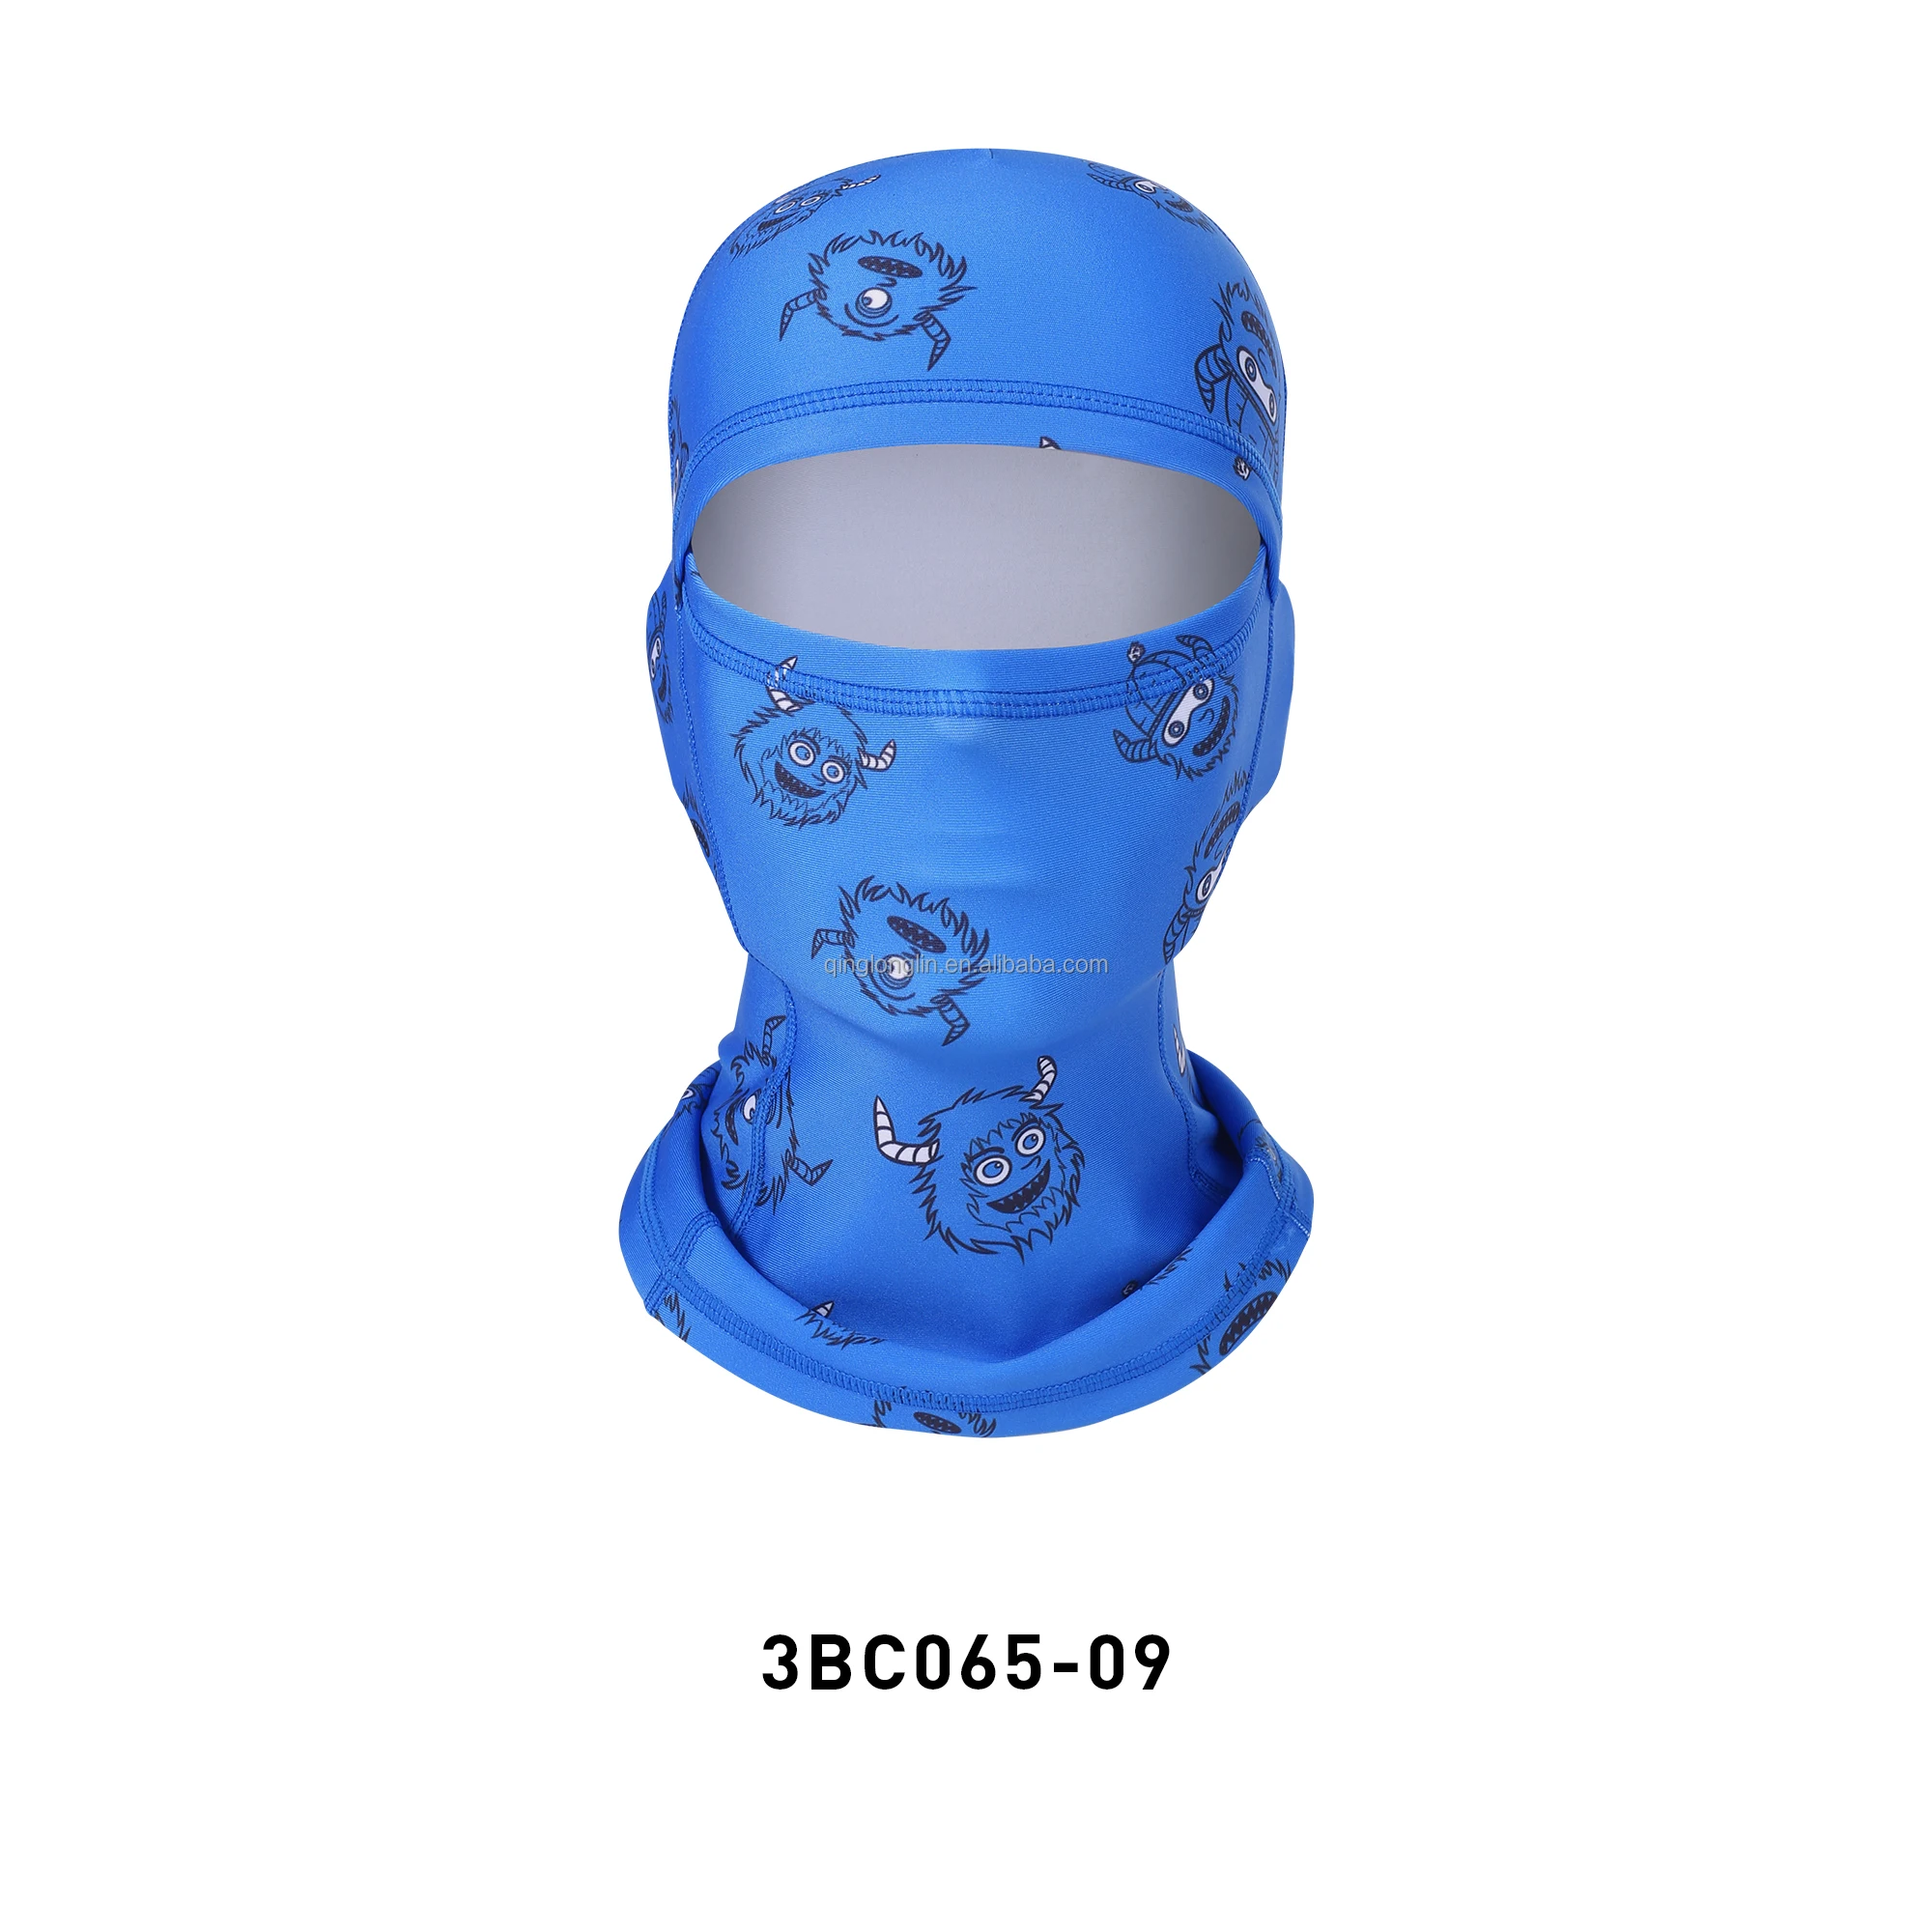 Sublimated Ski Mask - Tiger Face, Front and back print